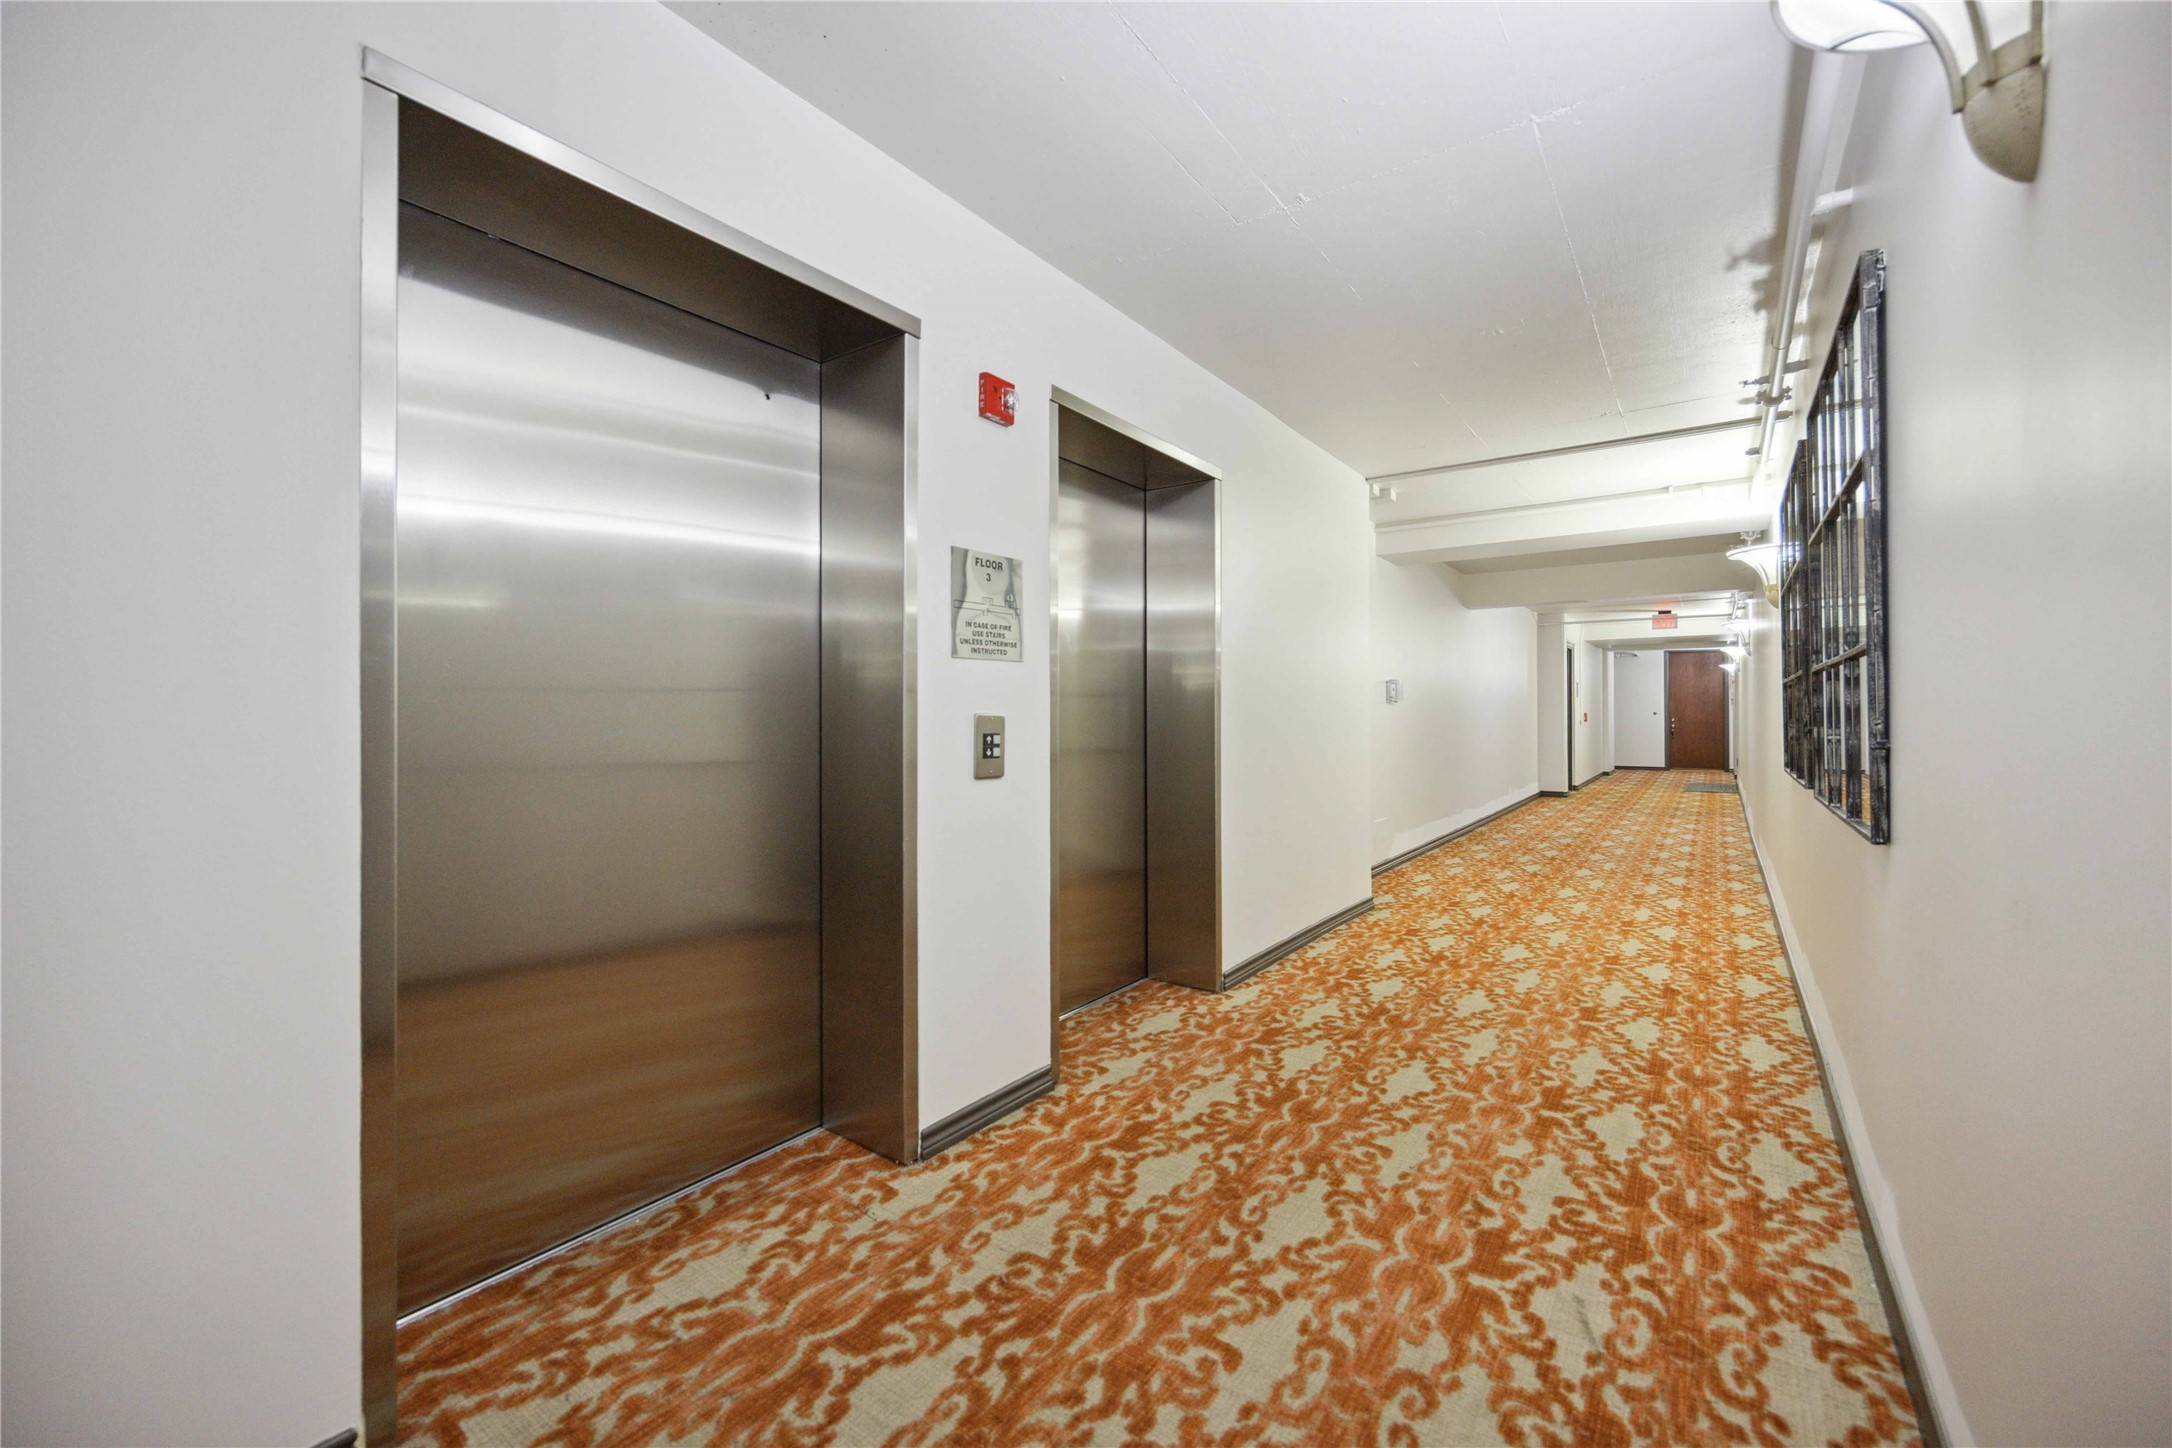 Hallway with elevators